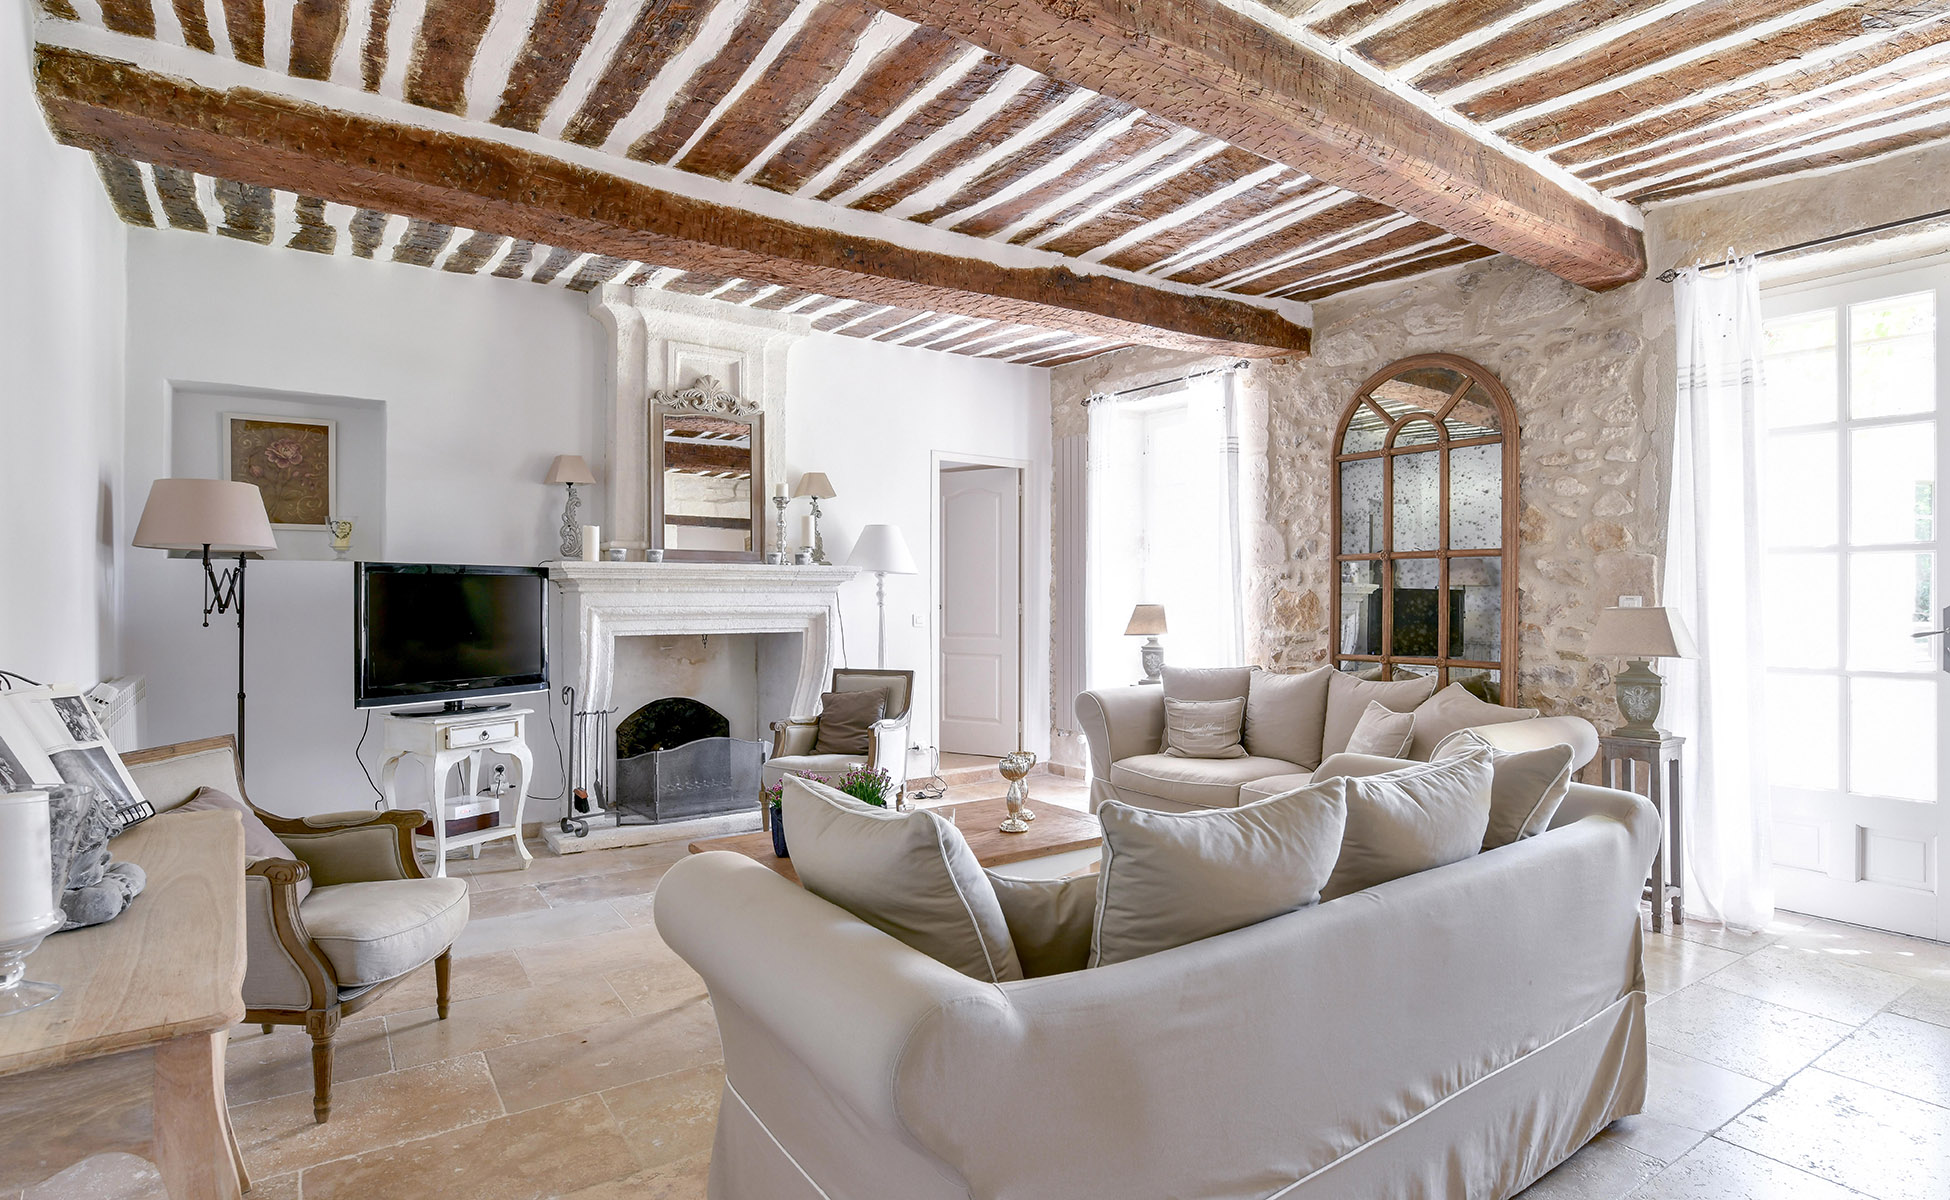 Lovelydays luxury service apartment rental - St Rémy de Provence and surroundings - Mas Ameu - Partner - 6 bedrooms - 6 bathrooms - Luxury living room - d2accaafc6ba - Lovelydays